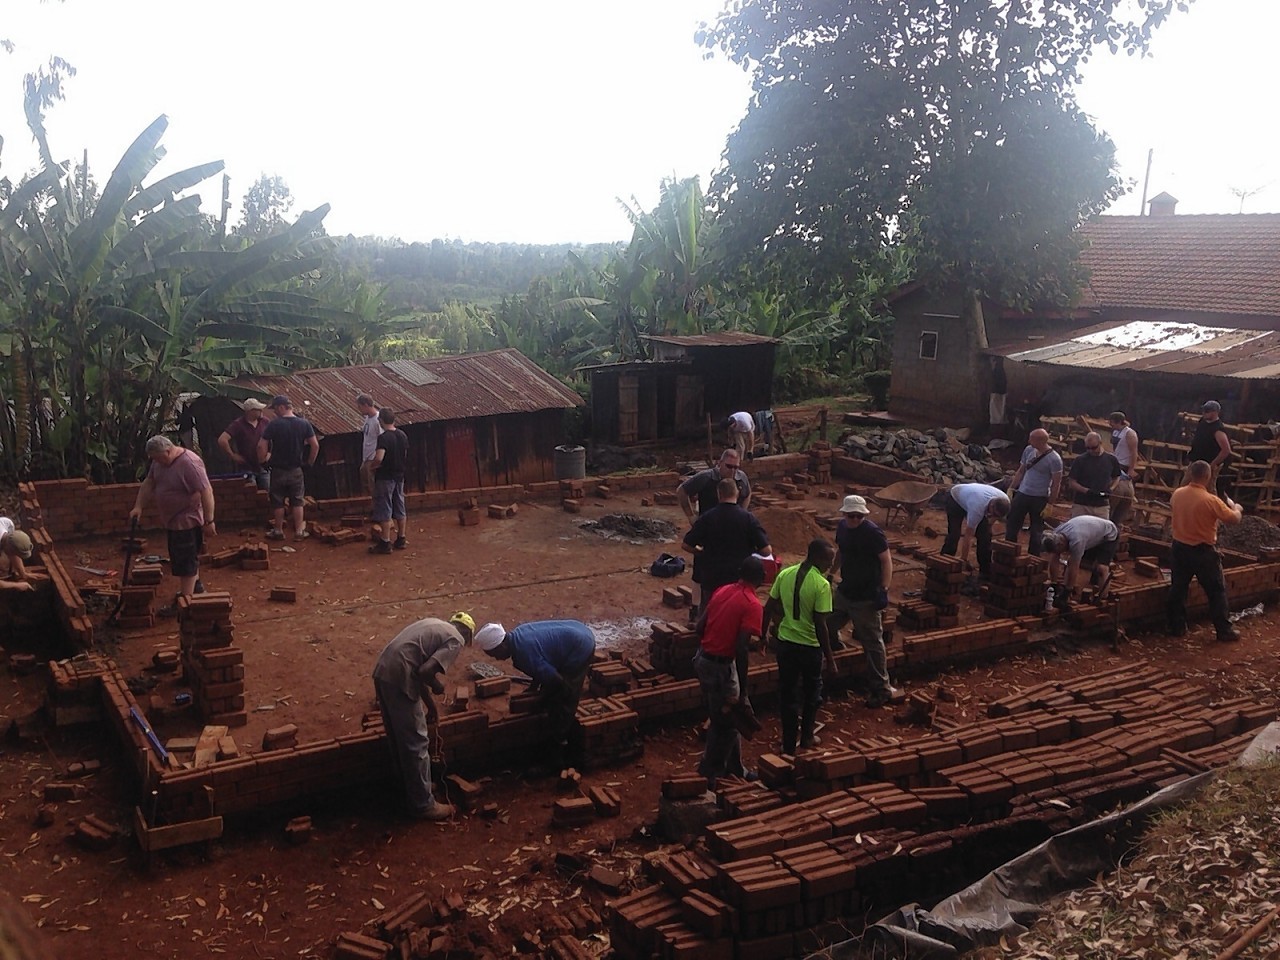 The builders in action in Kenya